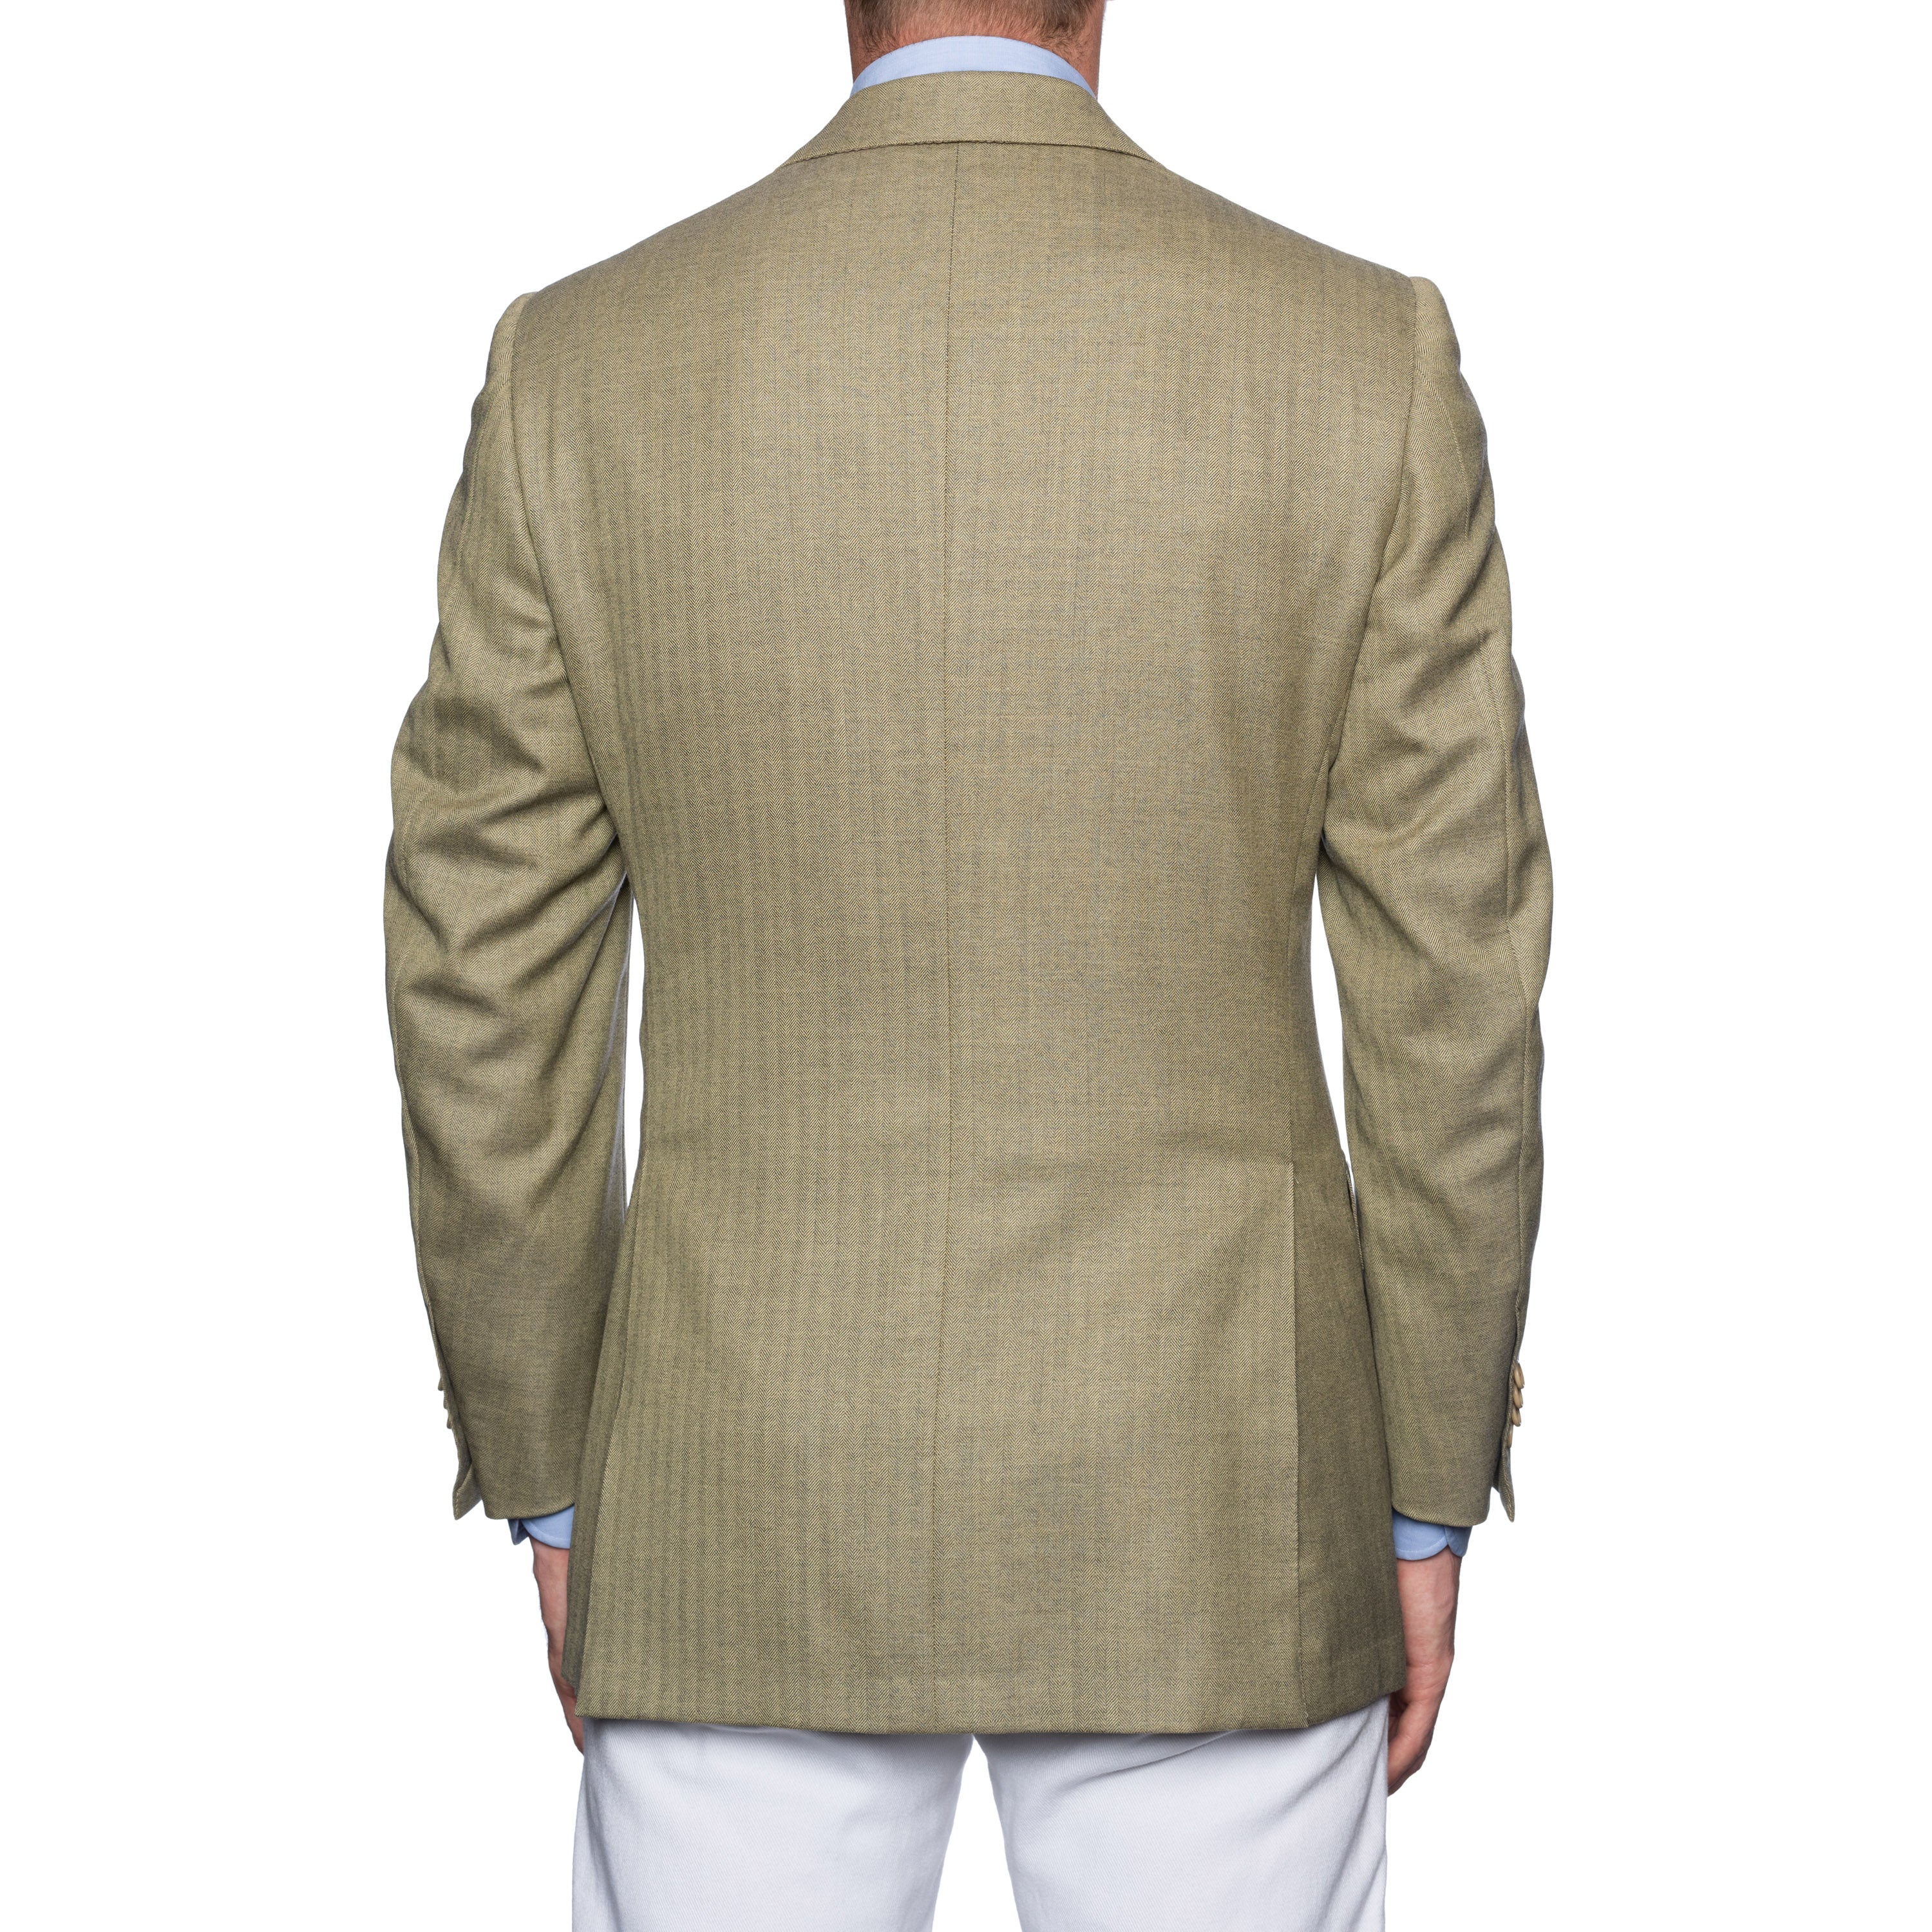 CASTANGIA 1850 Olive Herringbone Merino Wool Sport Coat Jacket EU 48 NEW US 38 CASTANGIA